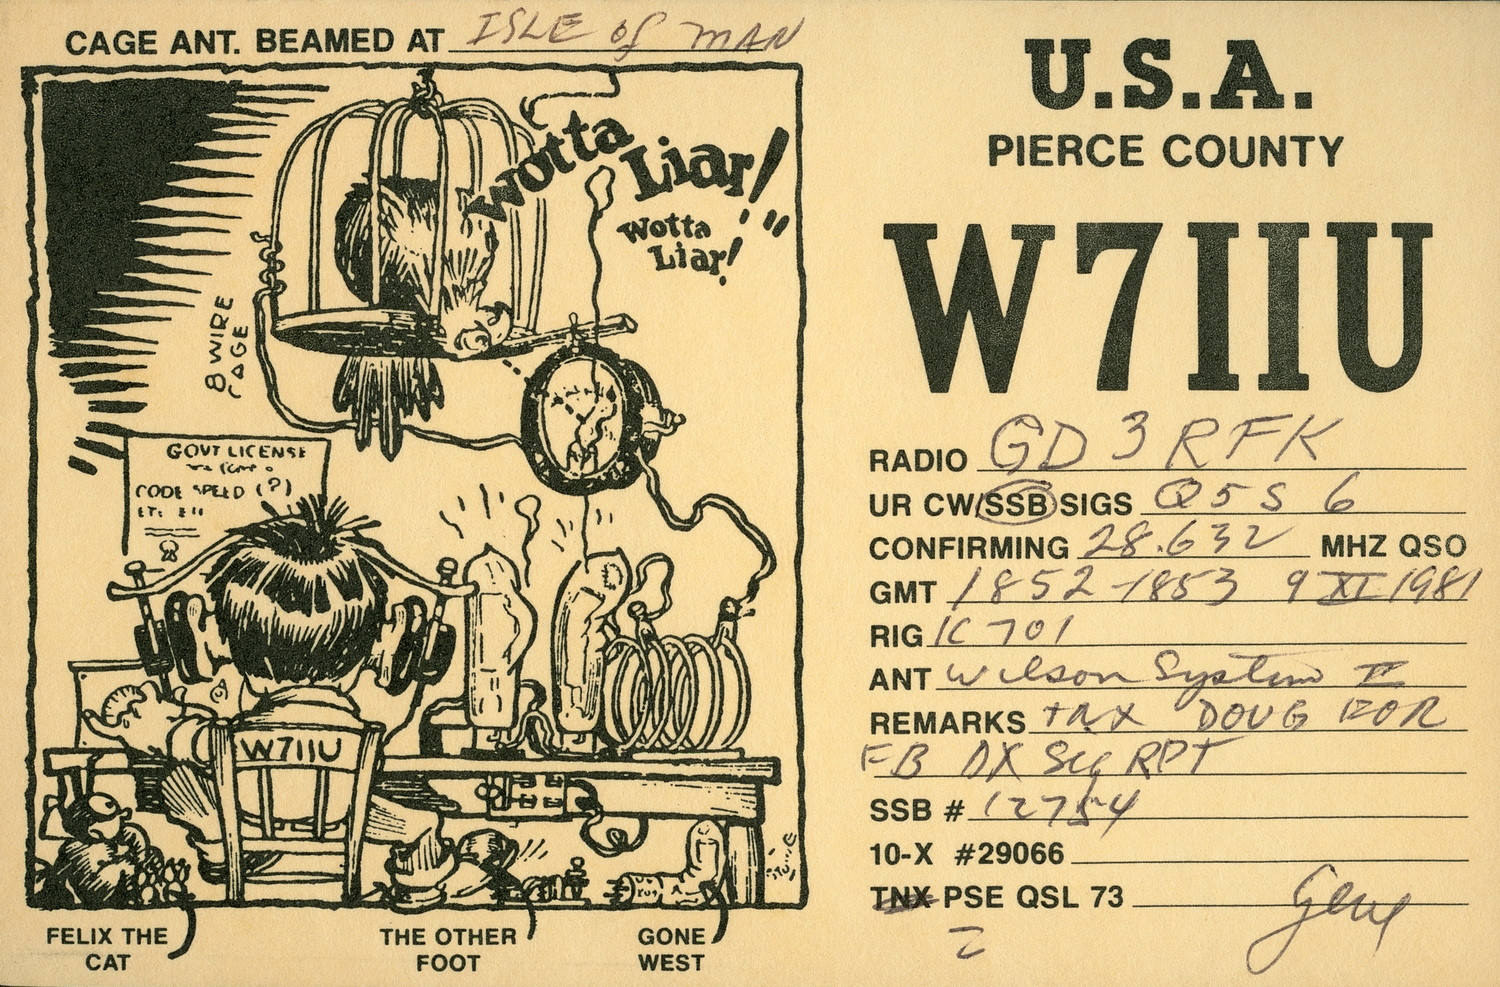 W7IIU (Gene), QSO on 9th September 1981, 28.632 MHz SSB.